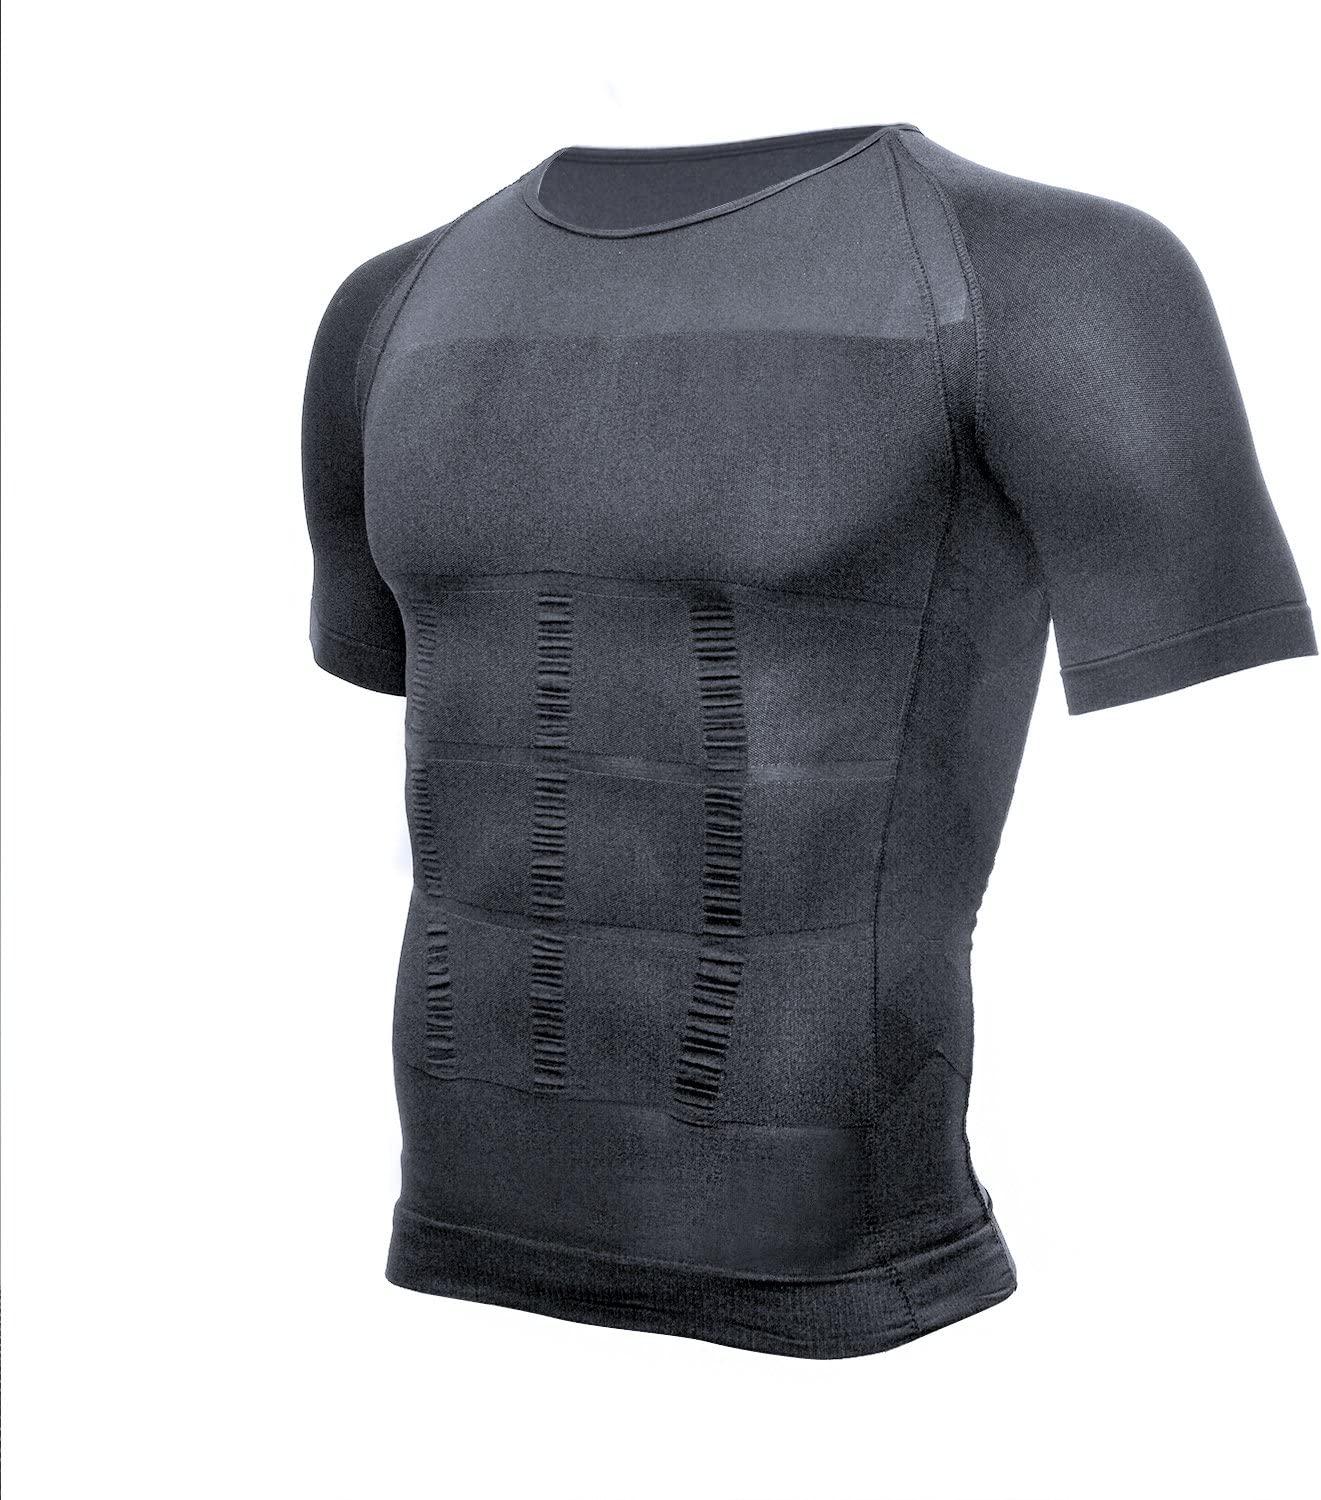 Men's Body Shaper Slimming Shirt Tummy Vest